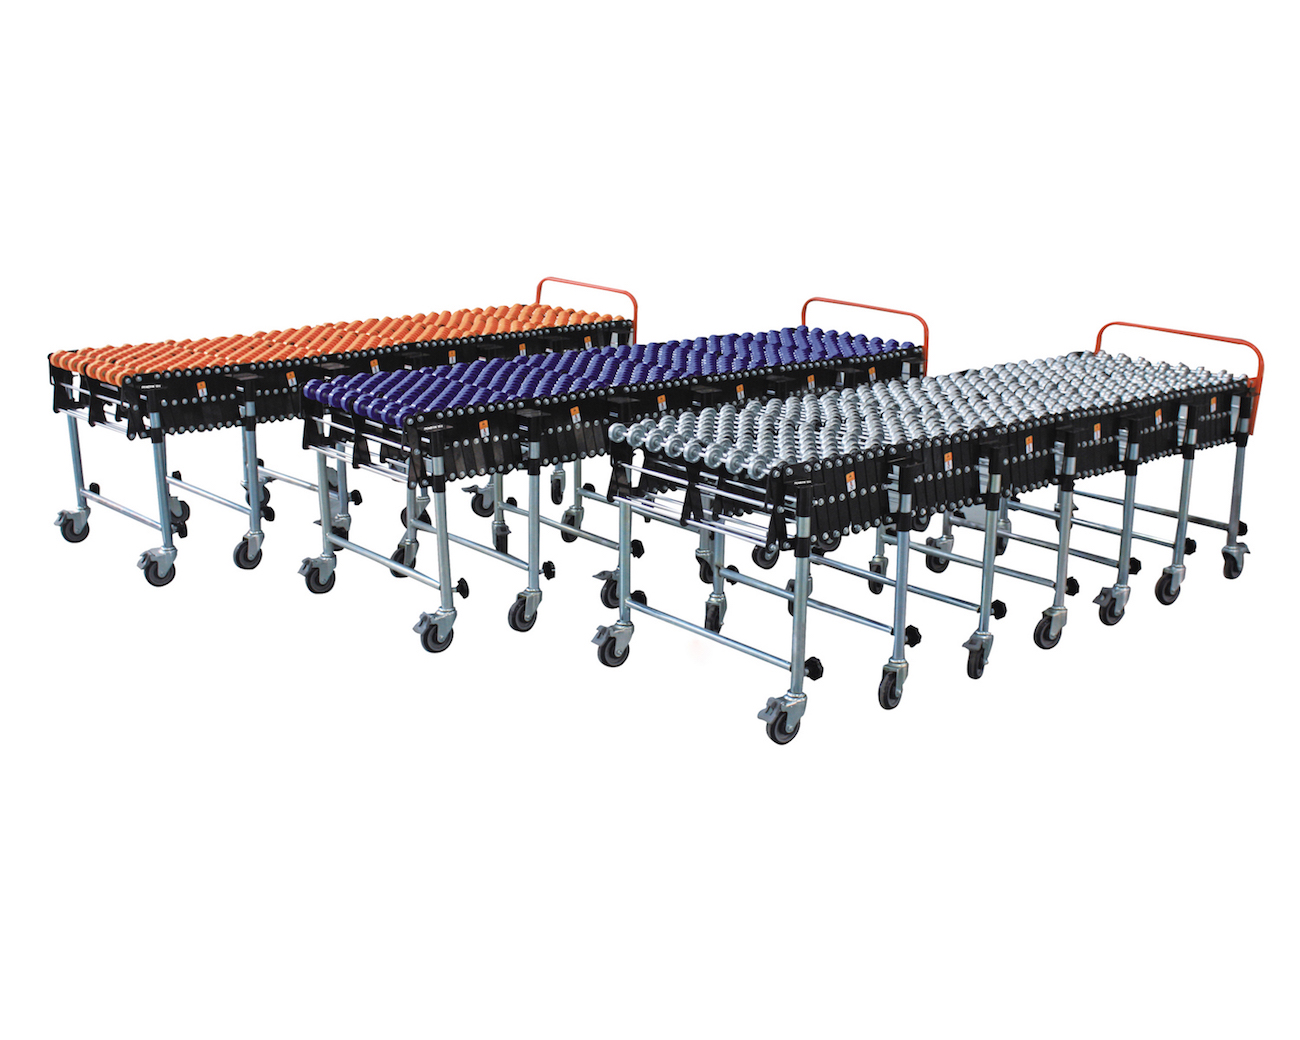 New heavy duty roller conveyor systems wheel company for storehouse-1